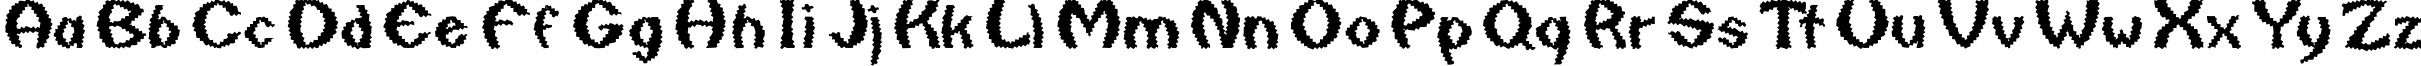 Пример написания английского алфавита шрифтом Quaxy Bold Italic